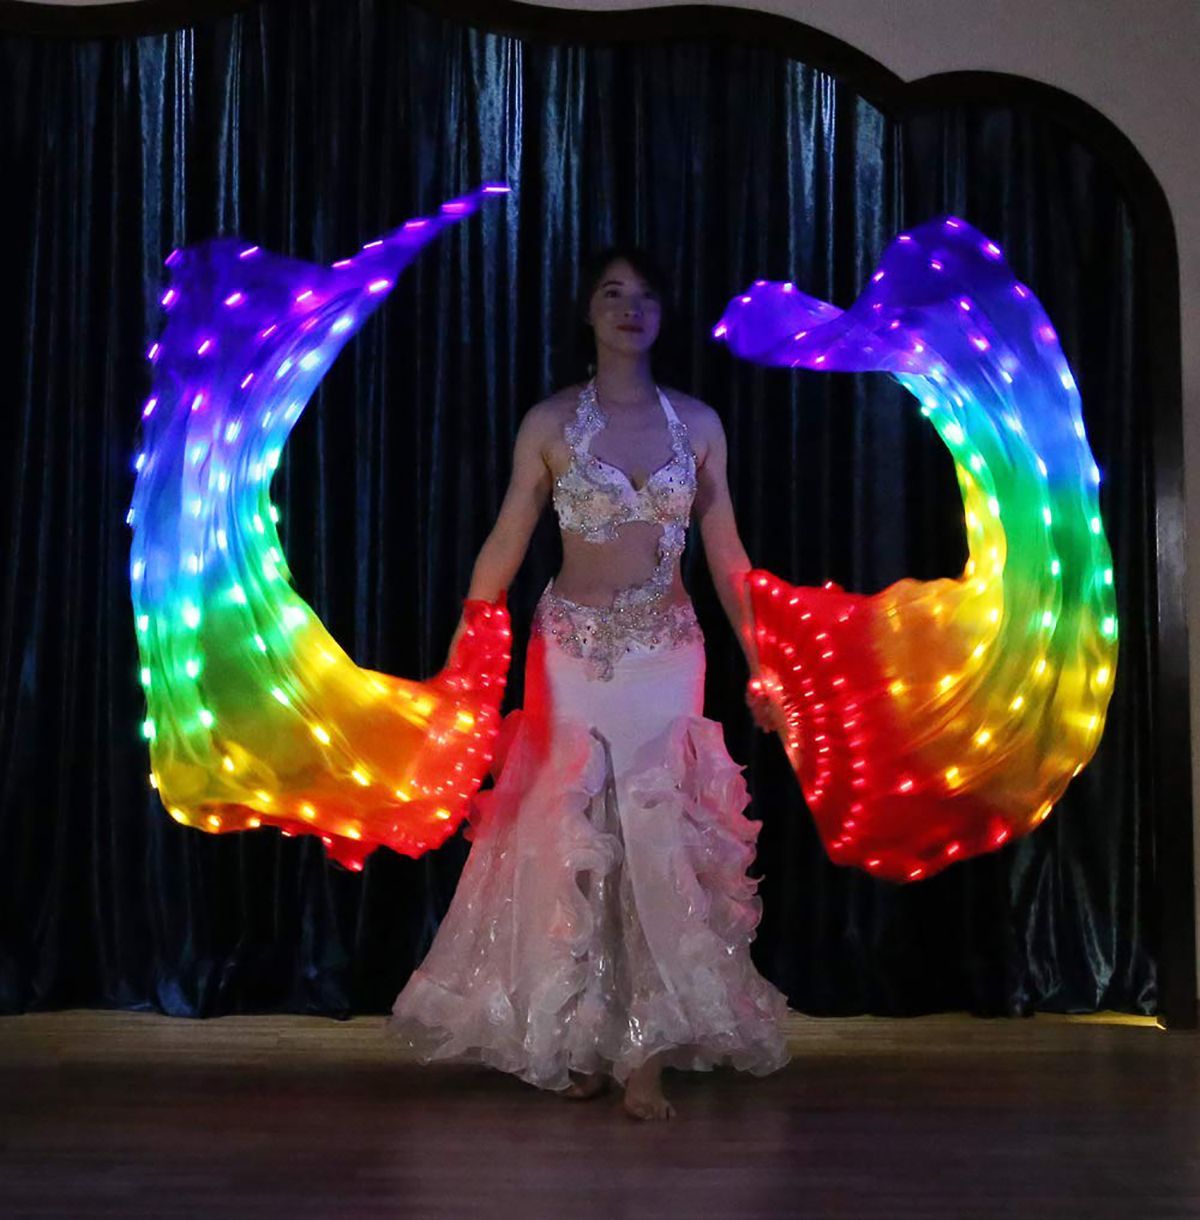 Mall-Belly-Dance-LED-Fan-Veil-Bamboo-Fans-Veil-Hand-Made-Silk-Fan-for-DanceOutdoor-Stage-Prop-Activi-1551572